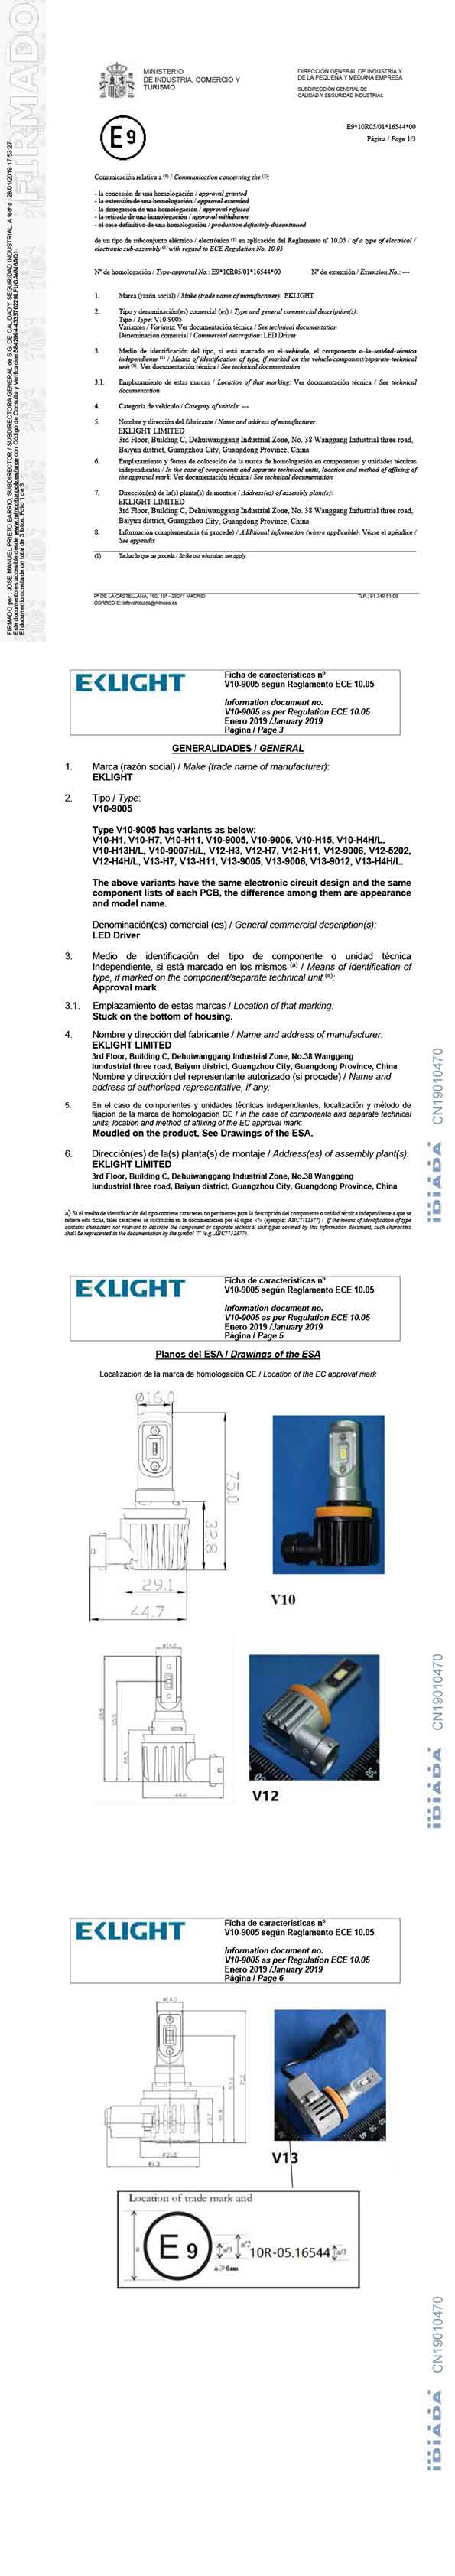 Pack Ampoules LED Phare pour Kia Ceed - Pro Ceed 2 - Homologation E9